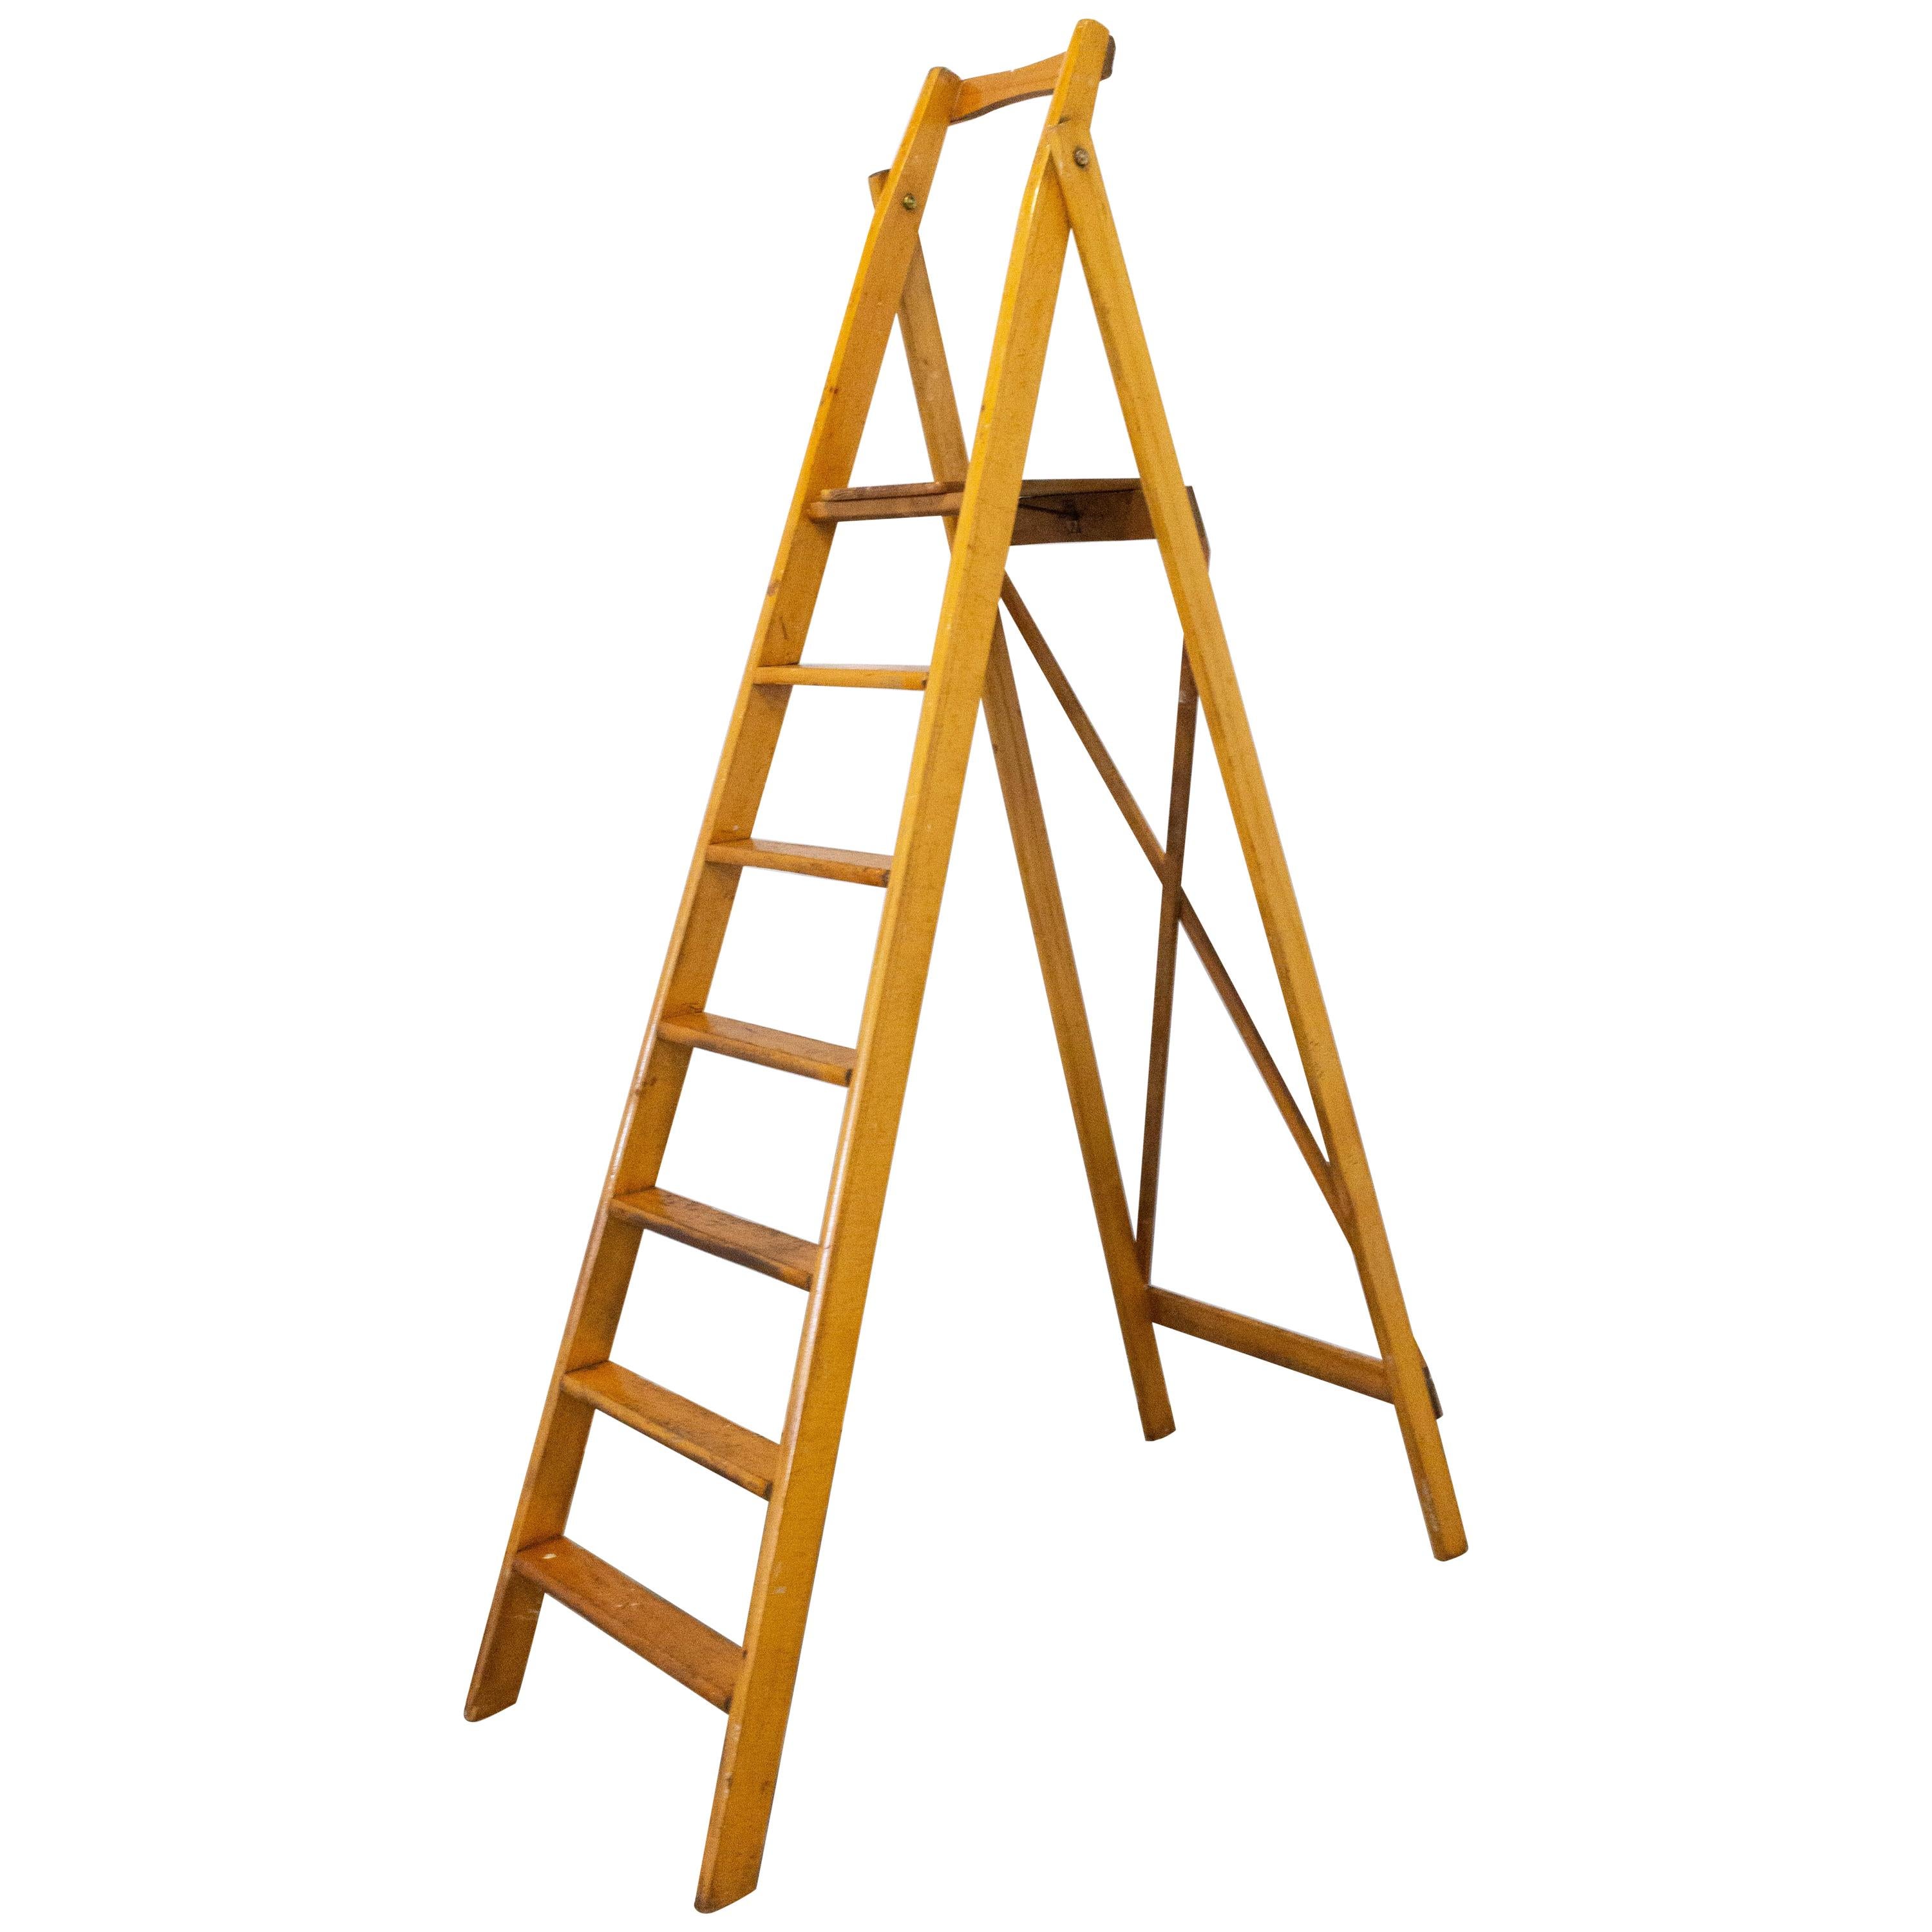 Folding Library Steps or Workshop Ladder Beech, 1950